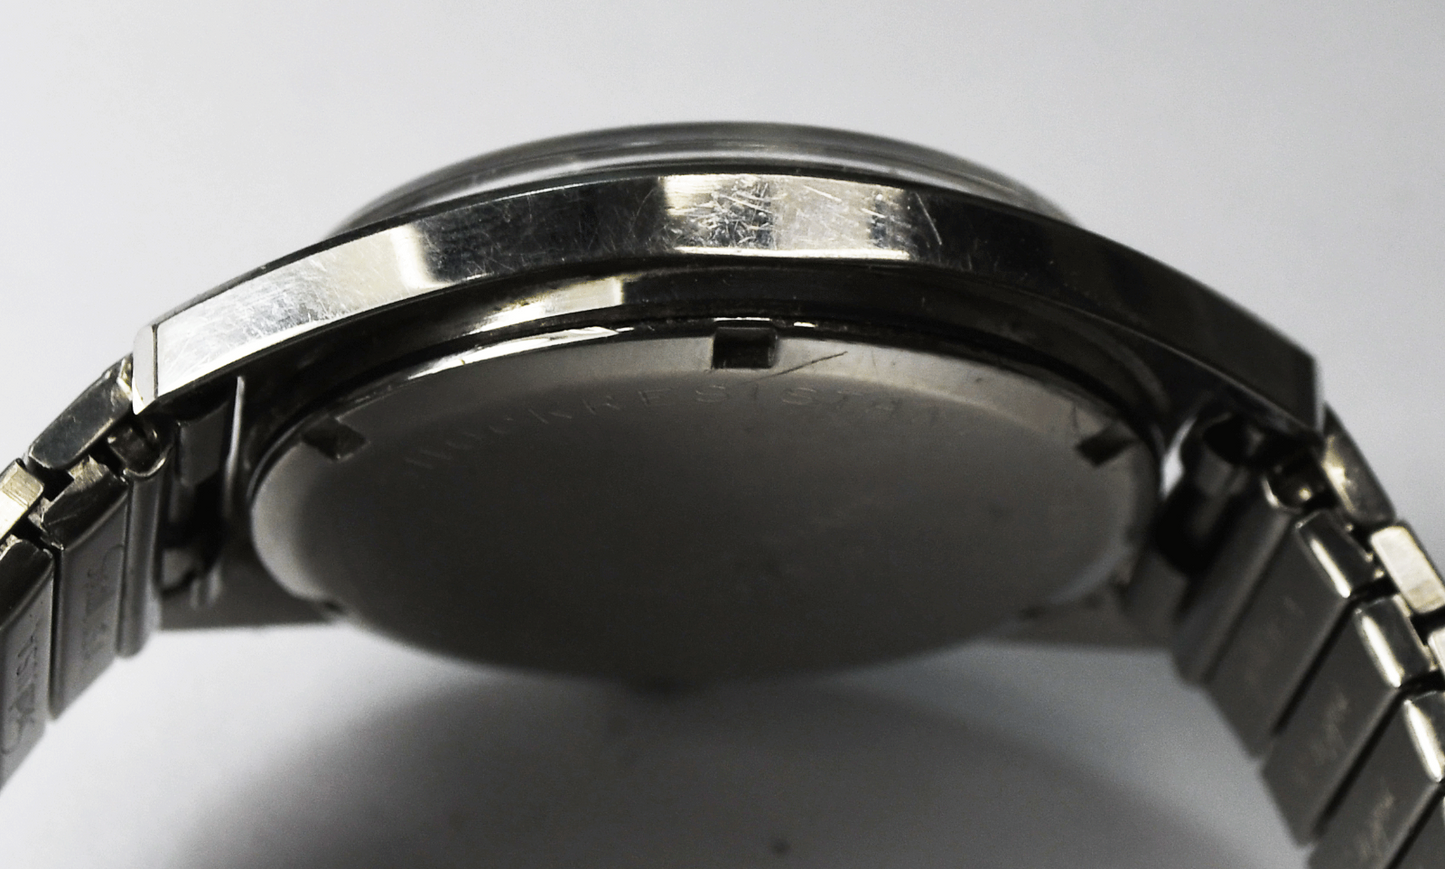 Vintage Glycine Manual Wind 1803 Wristwatch 33mm Stainless 2-Tone Pie Pan Dial